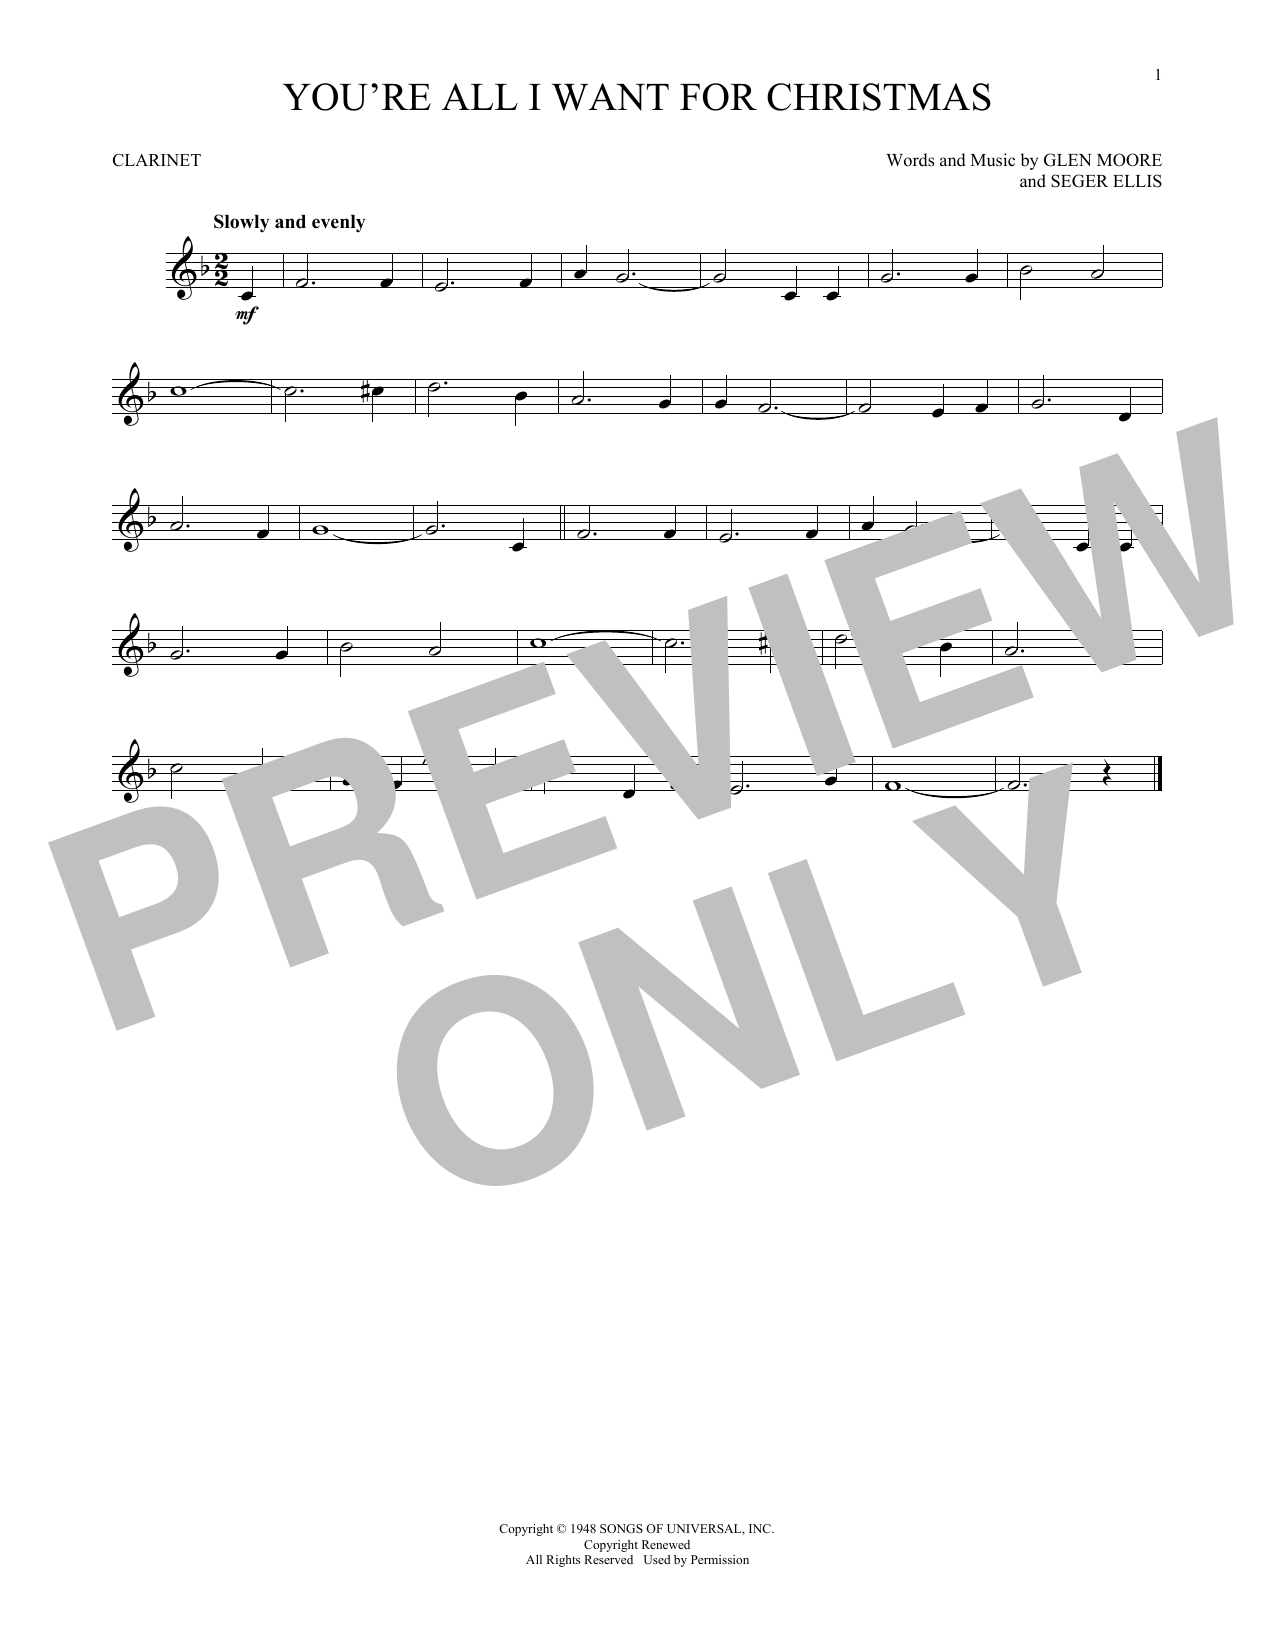 Glen Moore & Seger Ellis You're All I Want For Christmas Sheet Music Notes & Chords for Ukulele - Download or Print PDF